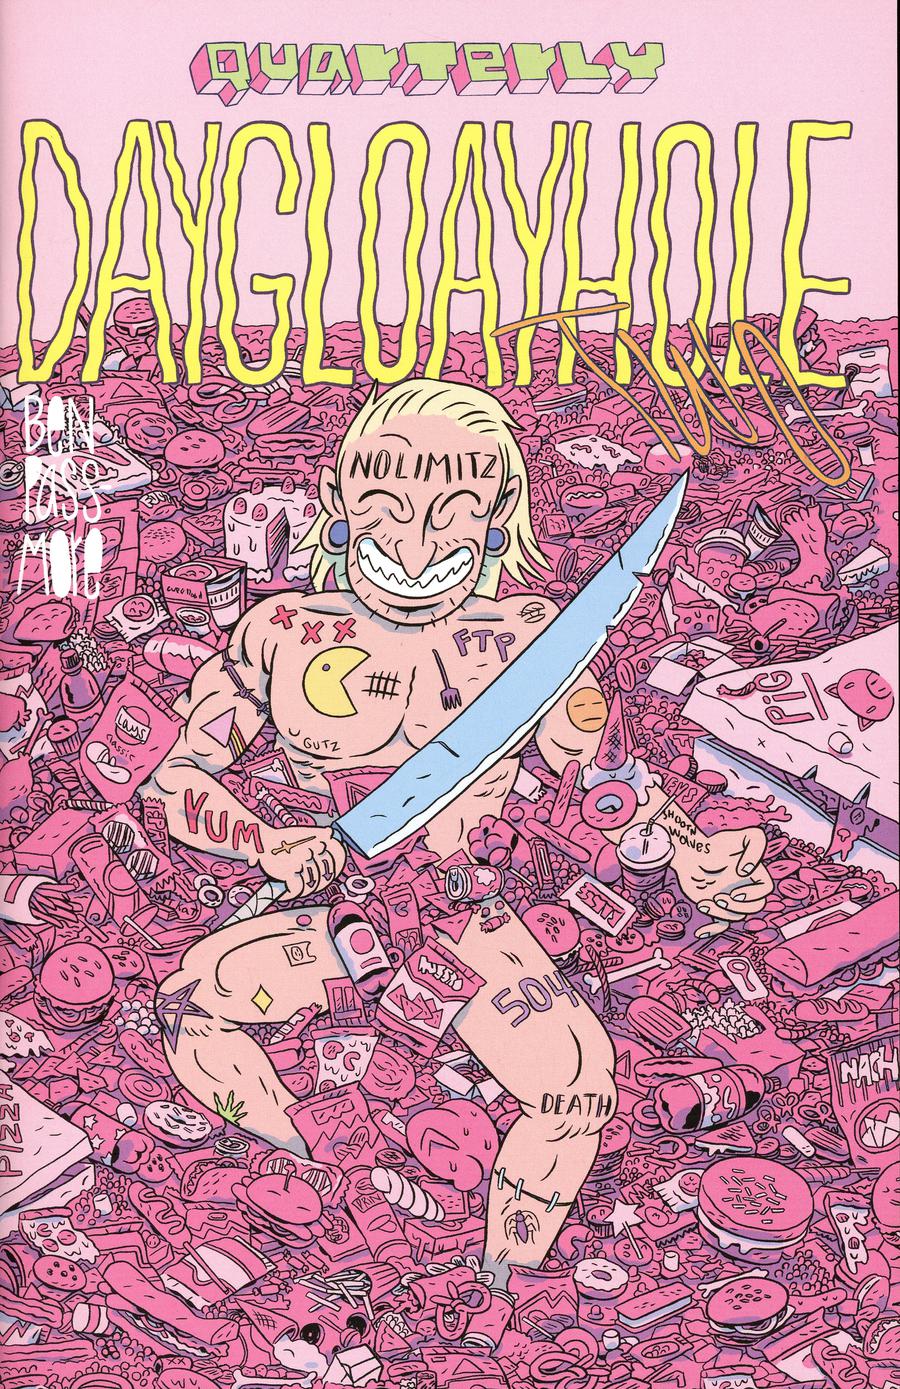 Daygloayhole Quarterly #2 Cover B Variant Ben Passmore No Limitz Cover